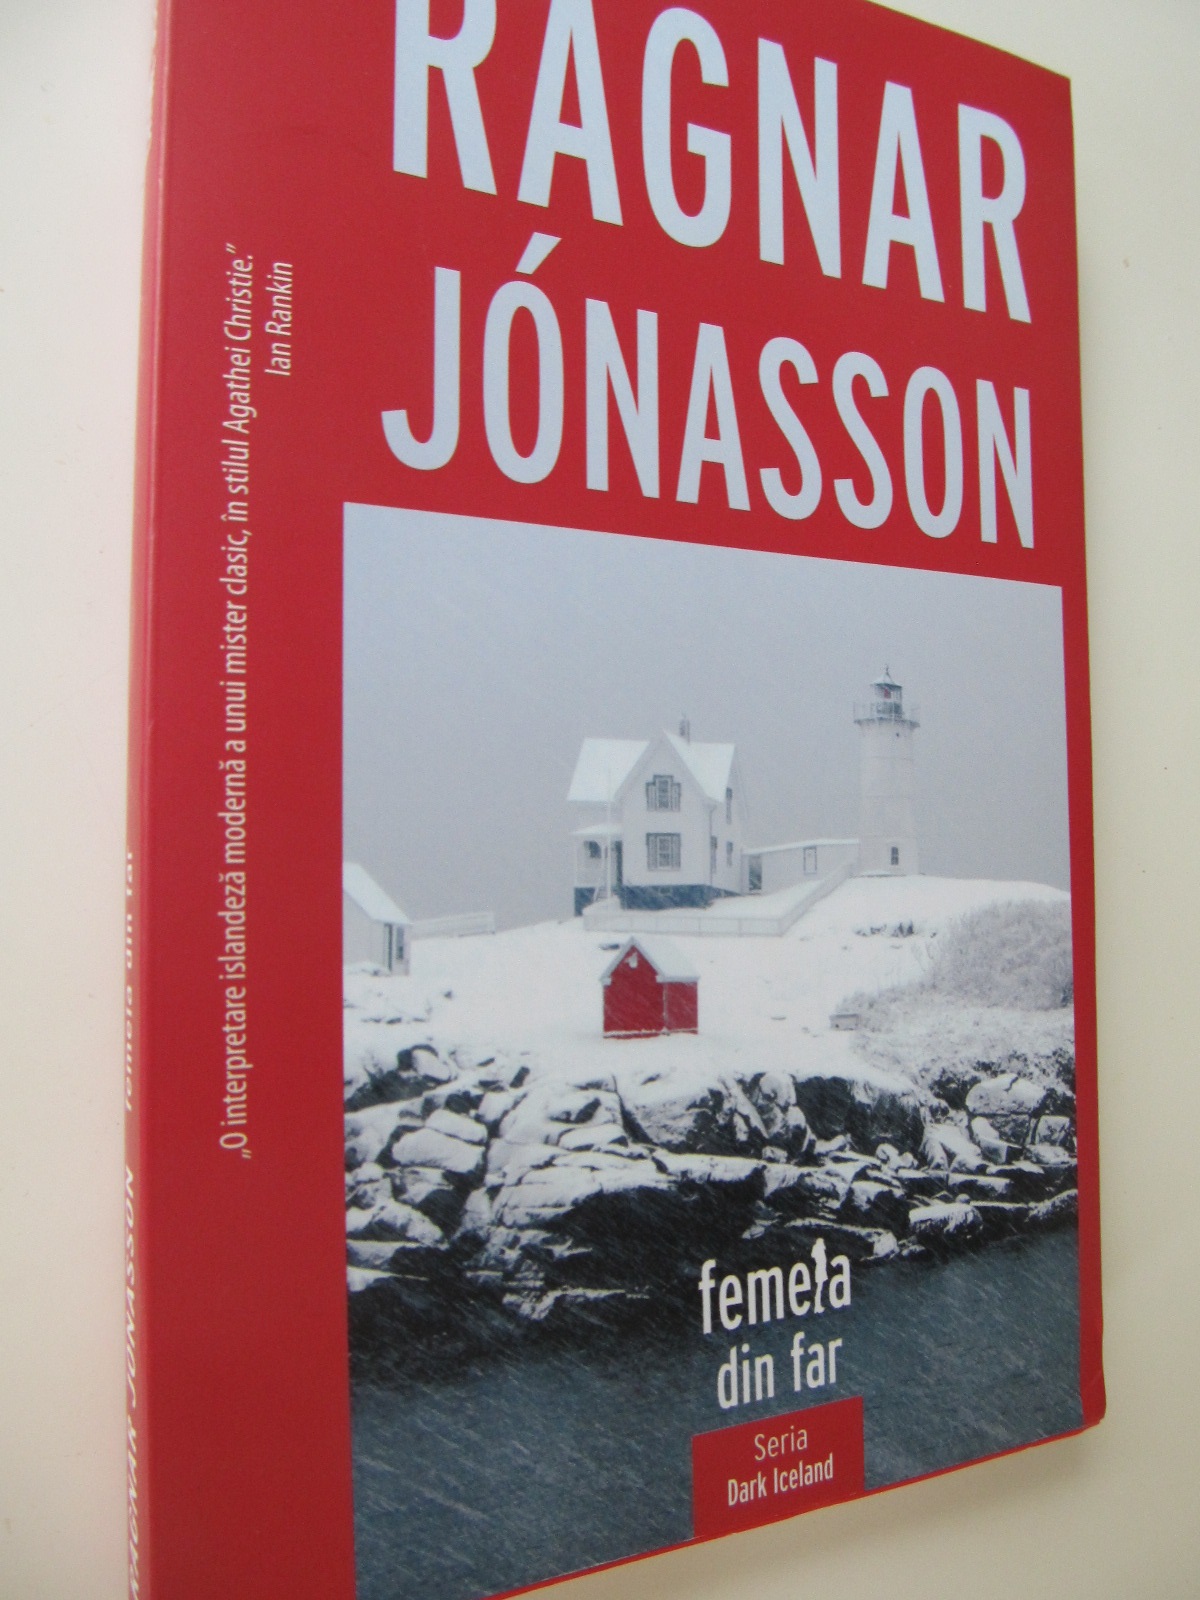 Femeia din far - Ragnar Jonasson | Detalii carte